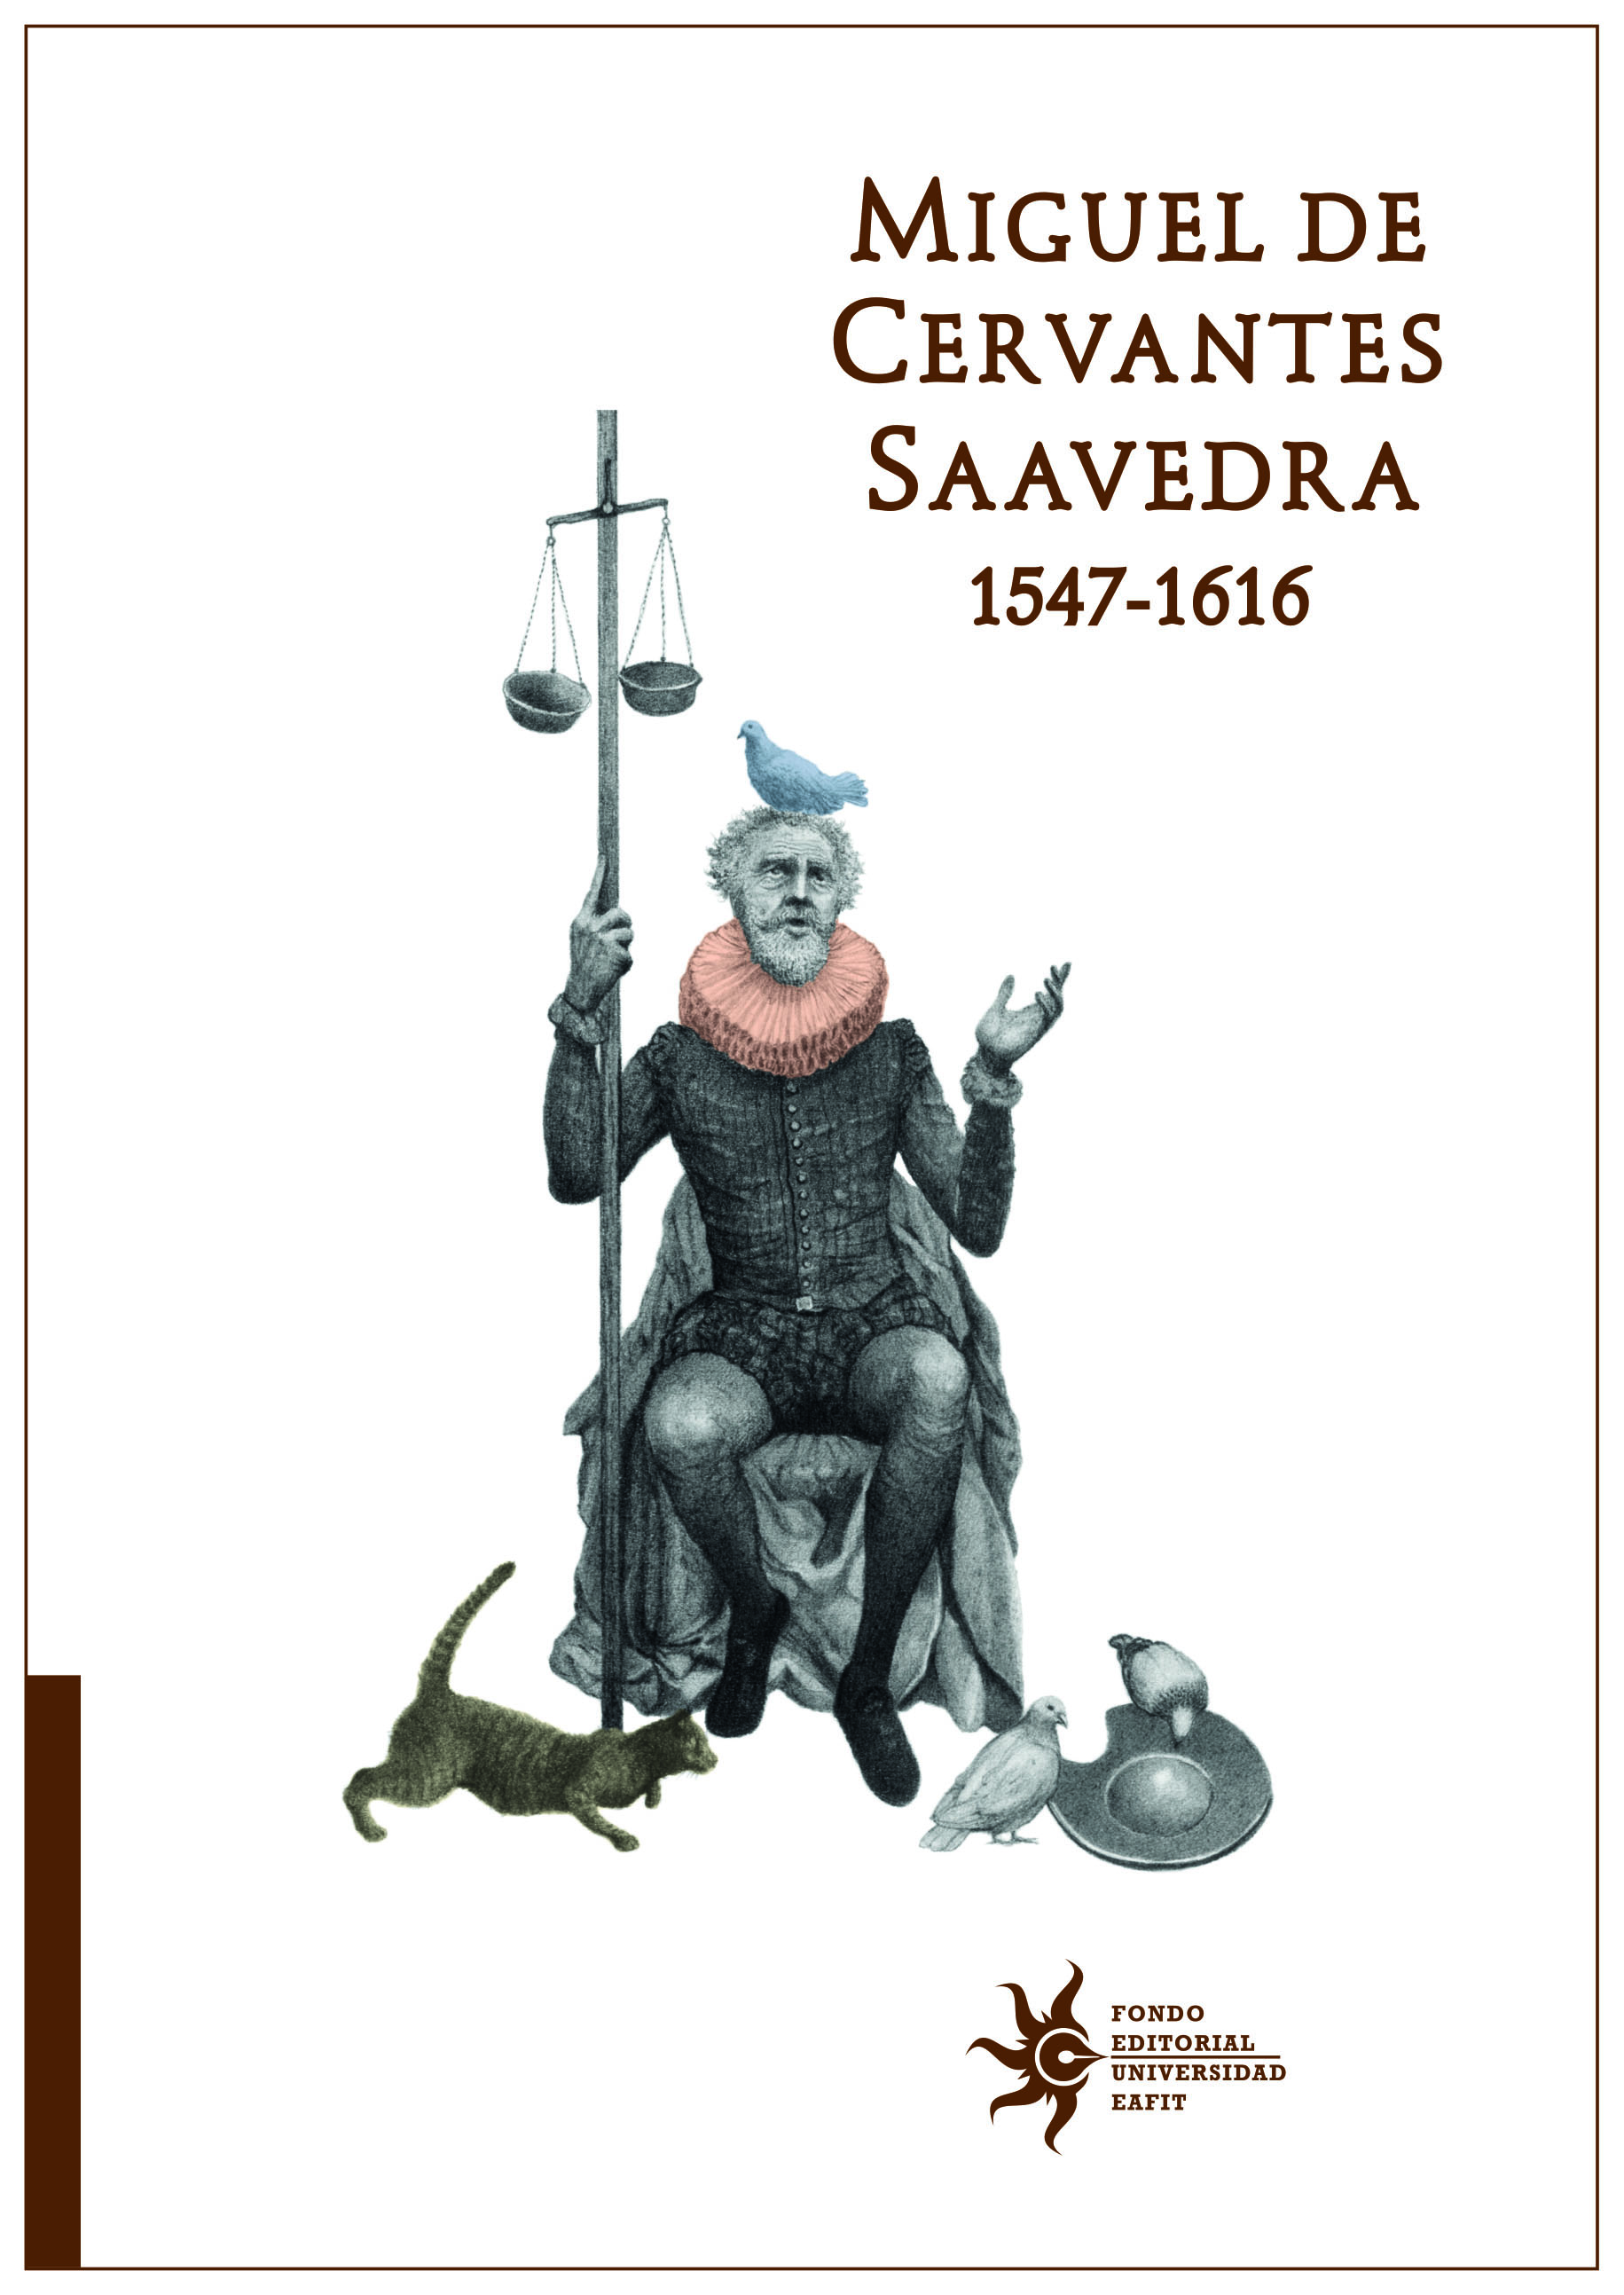 Miguel de Cervantes Saavedra.jpg